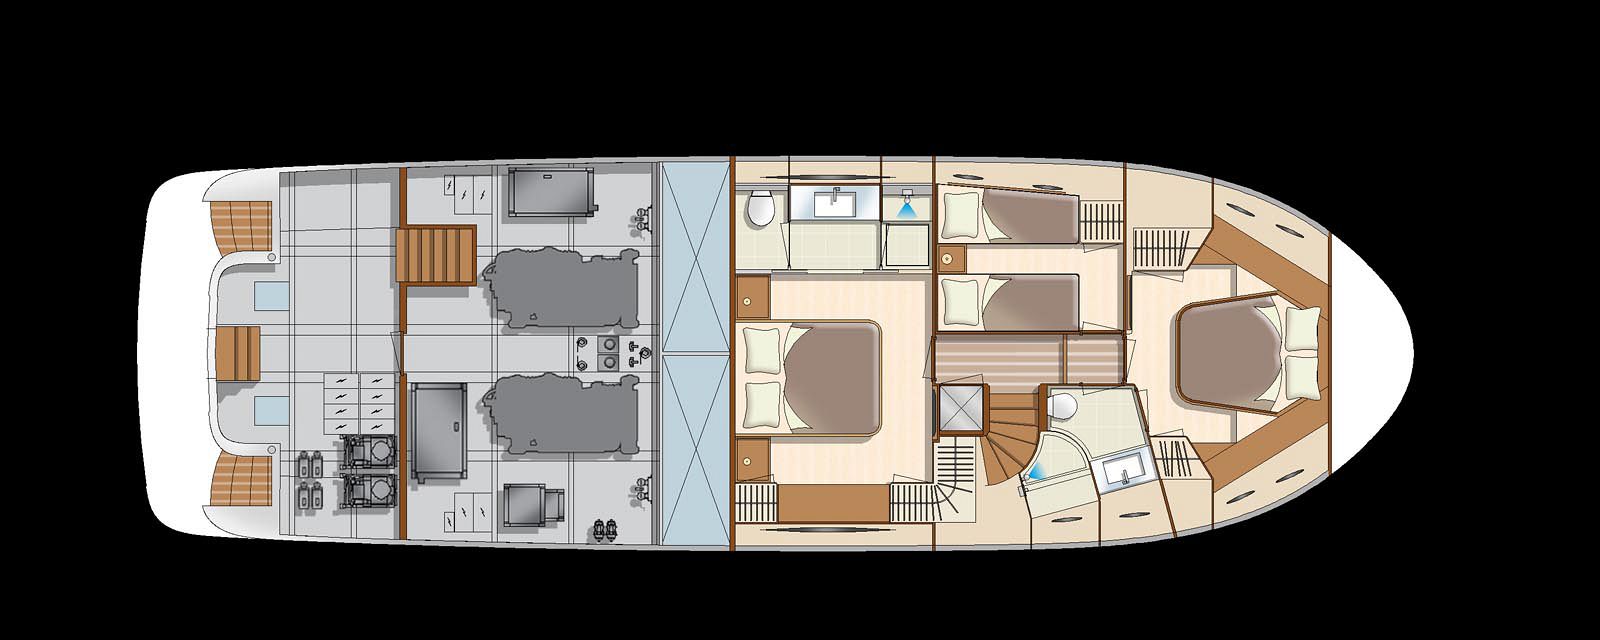 lower deck layout b